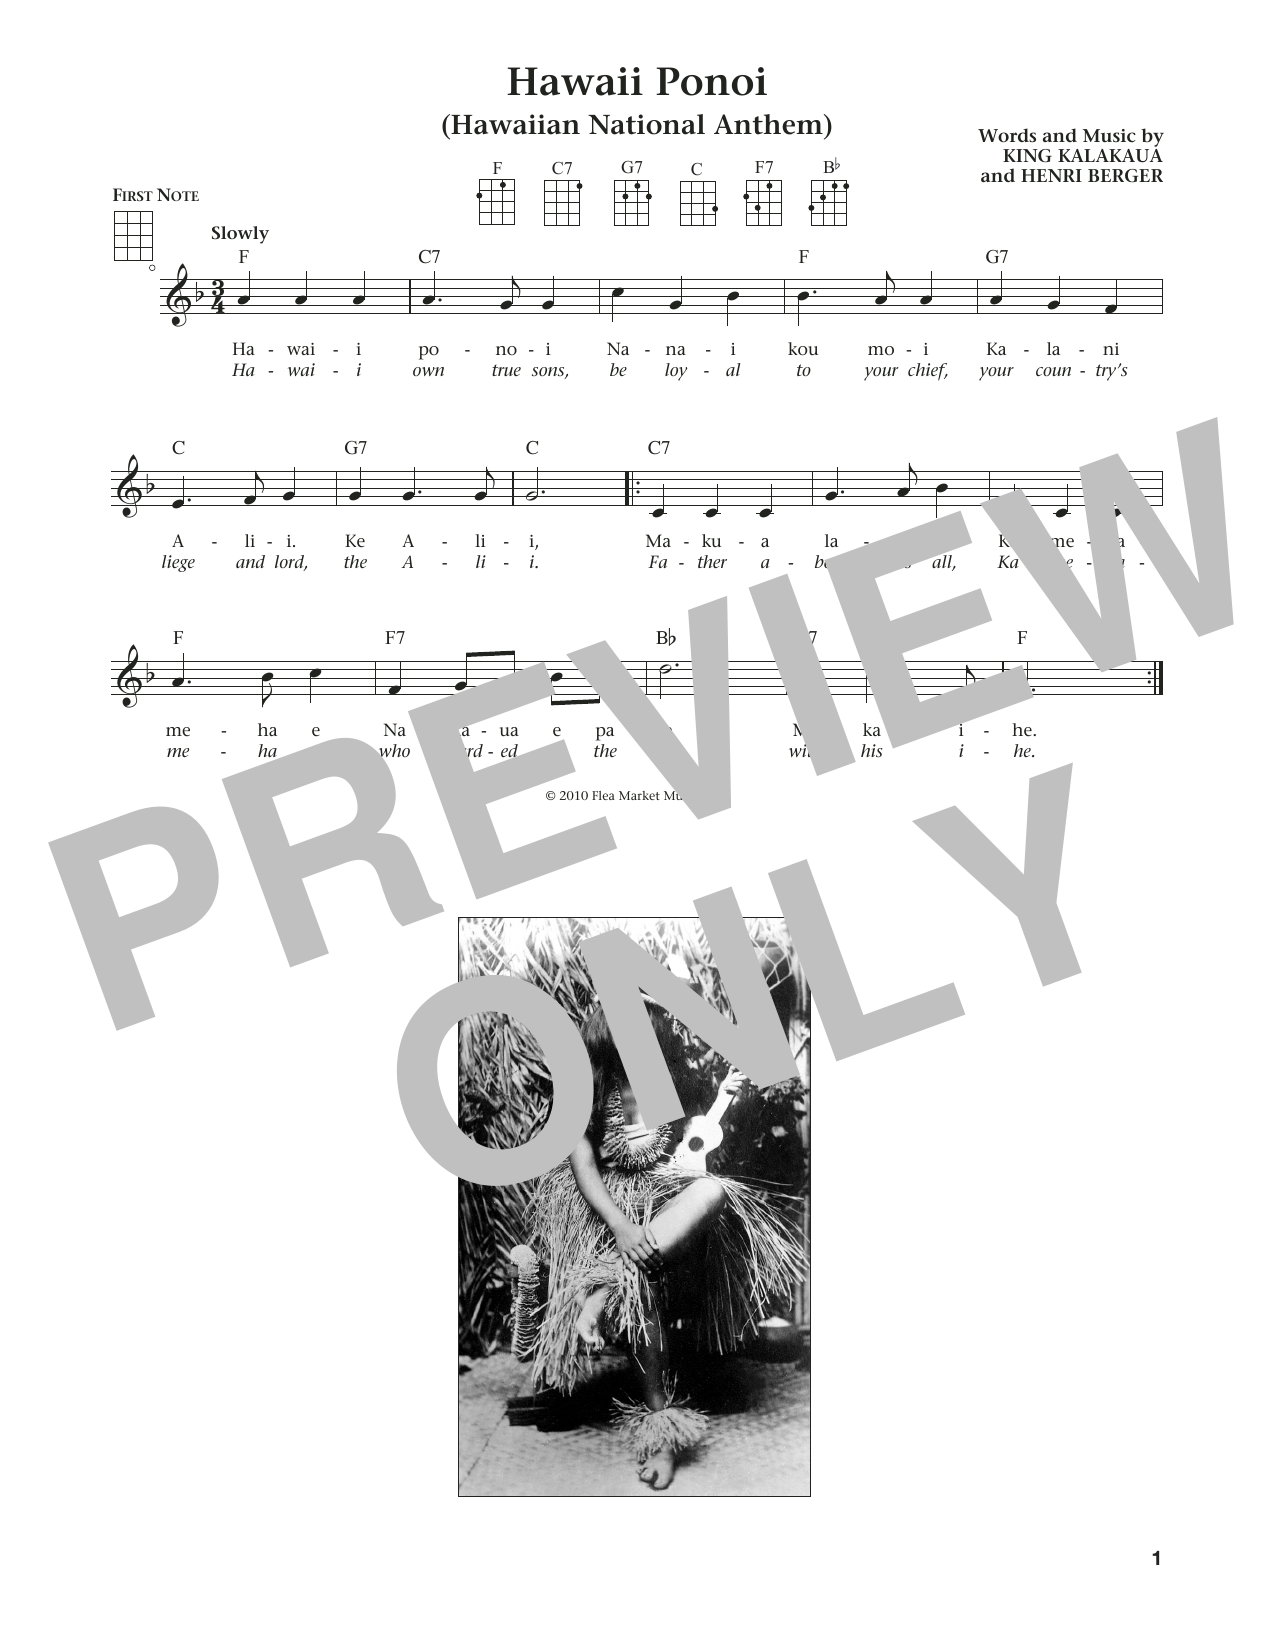 Henri Berger Hawaii Ponoi (from The Daily Ukulele) (arr. Liz and Jim Beloff) Sheet Music Notes & Chords for Ukulele - Download or Print PDF